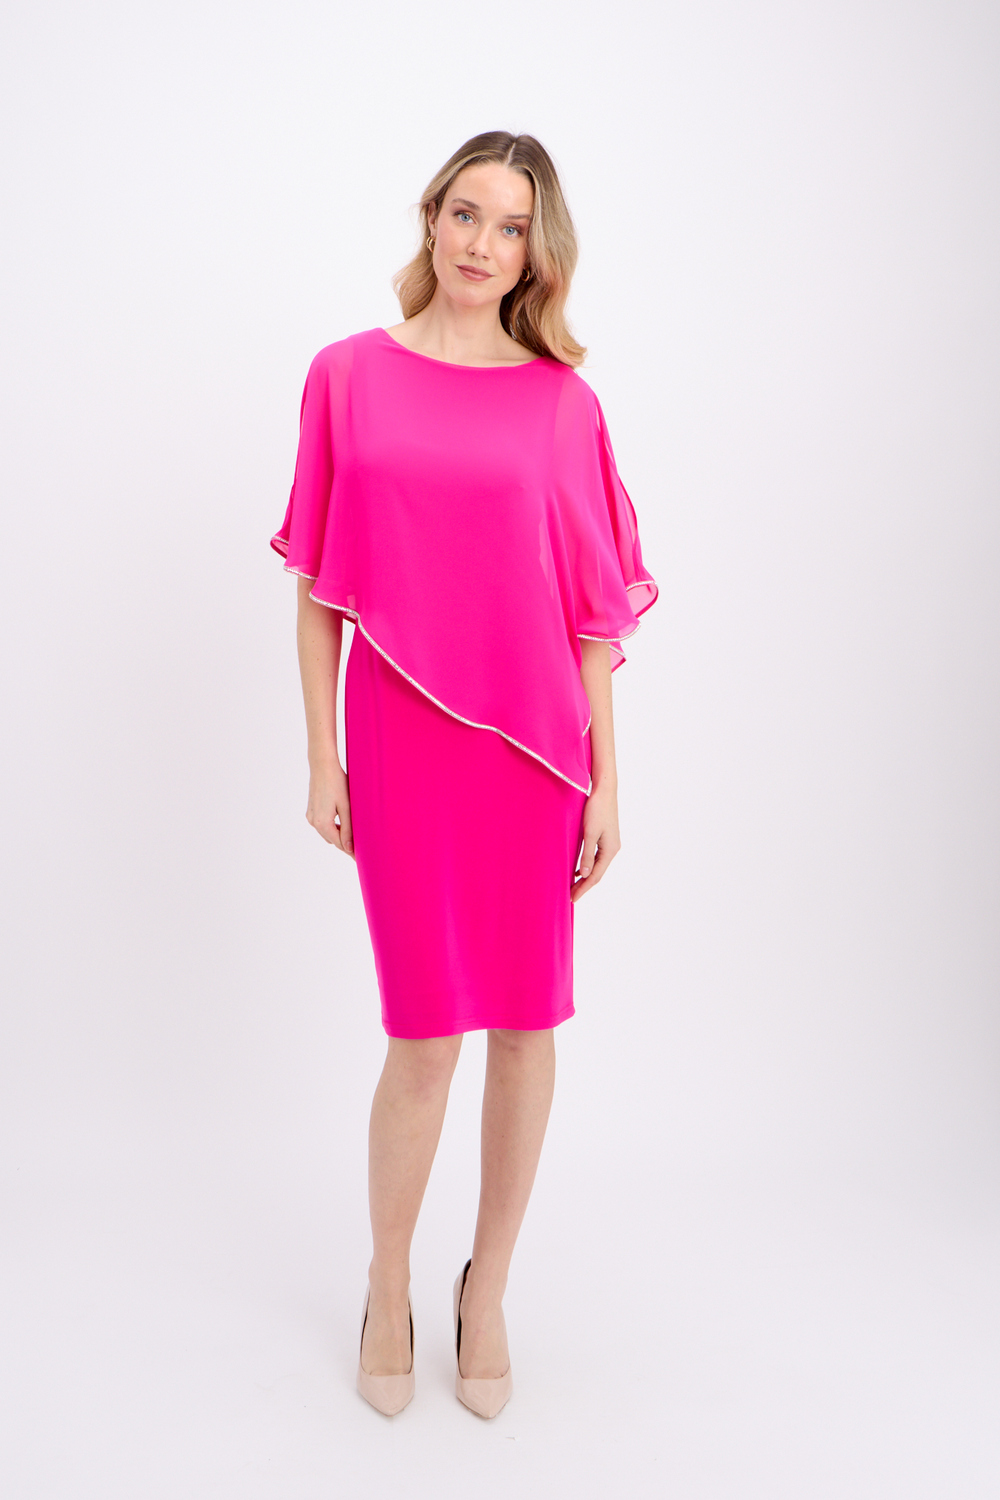 Dress with Asymmetric Hem Style 223762. Shocking Pink